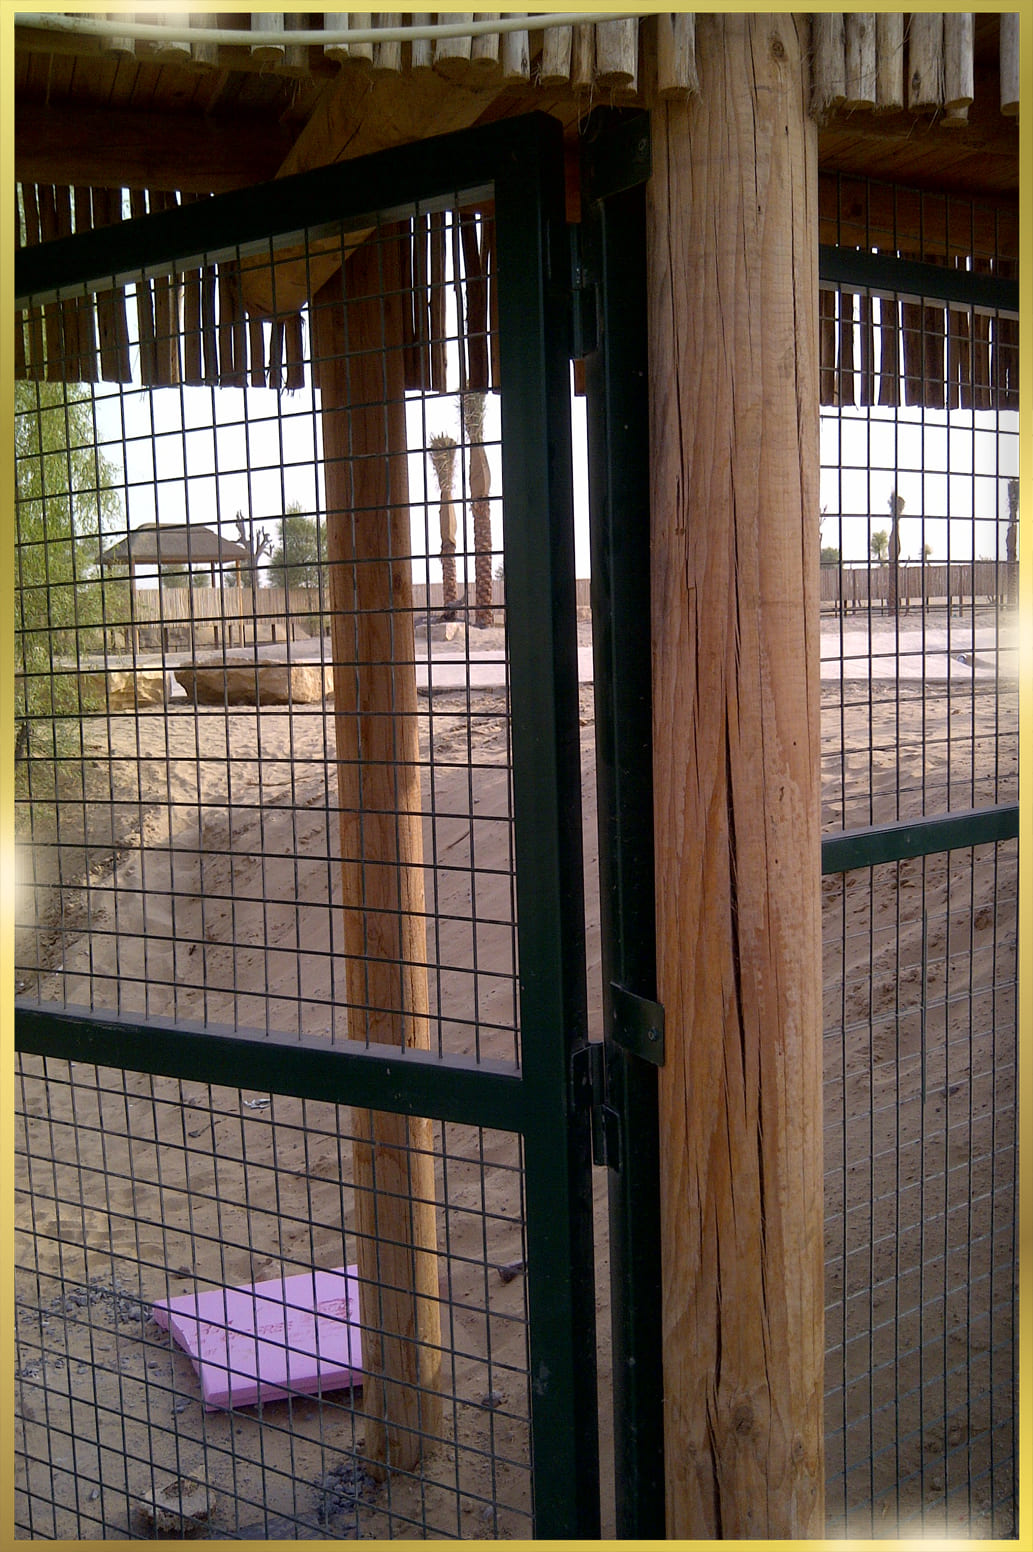 Stainless Steel Doors for Animal Housing in Crowne Prince Zoo